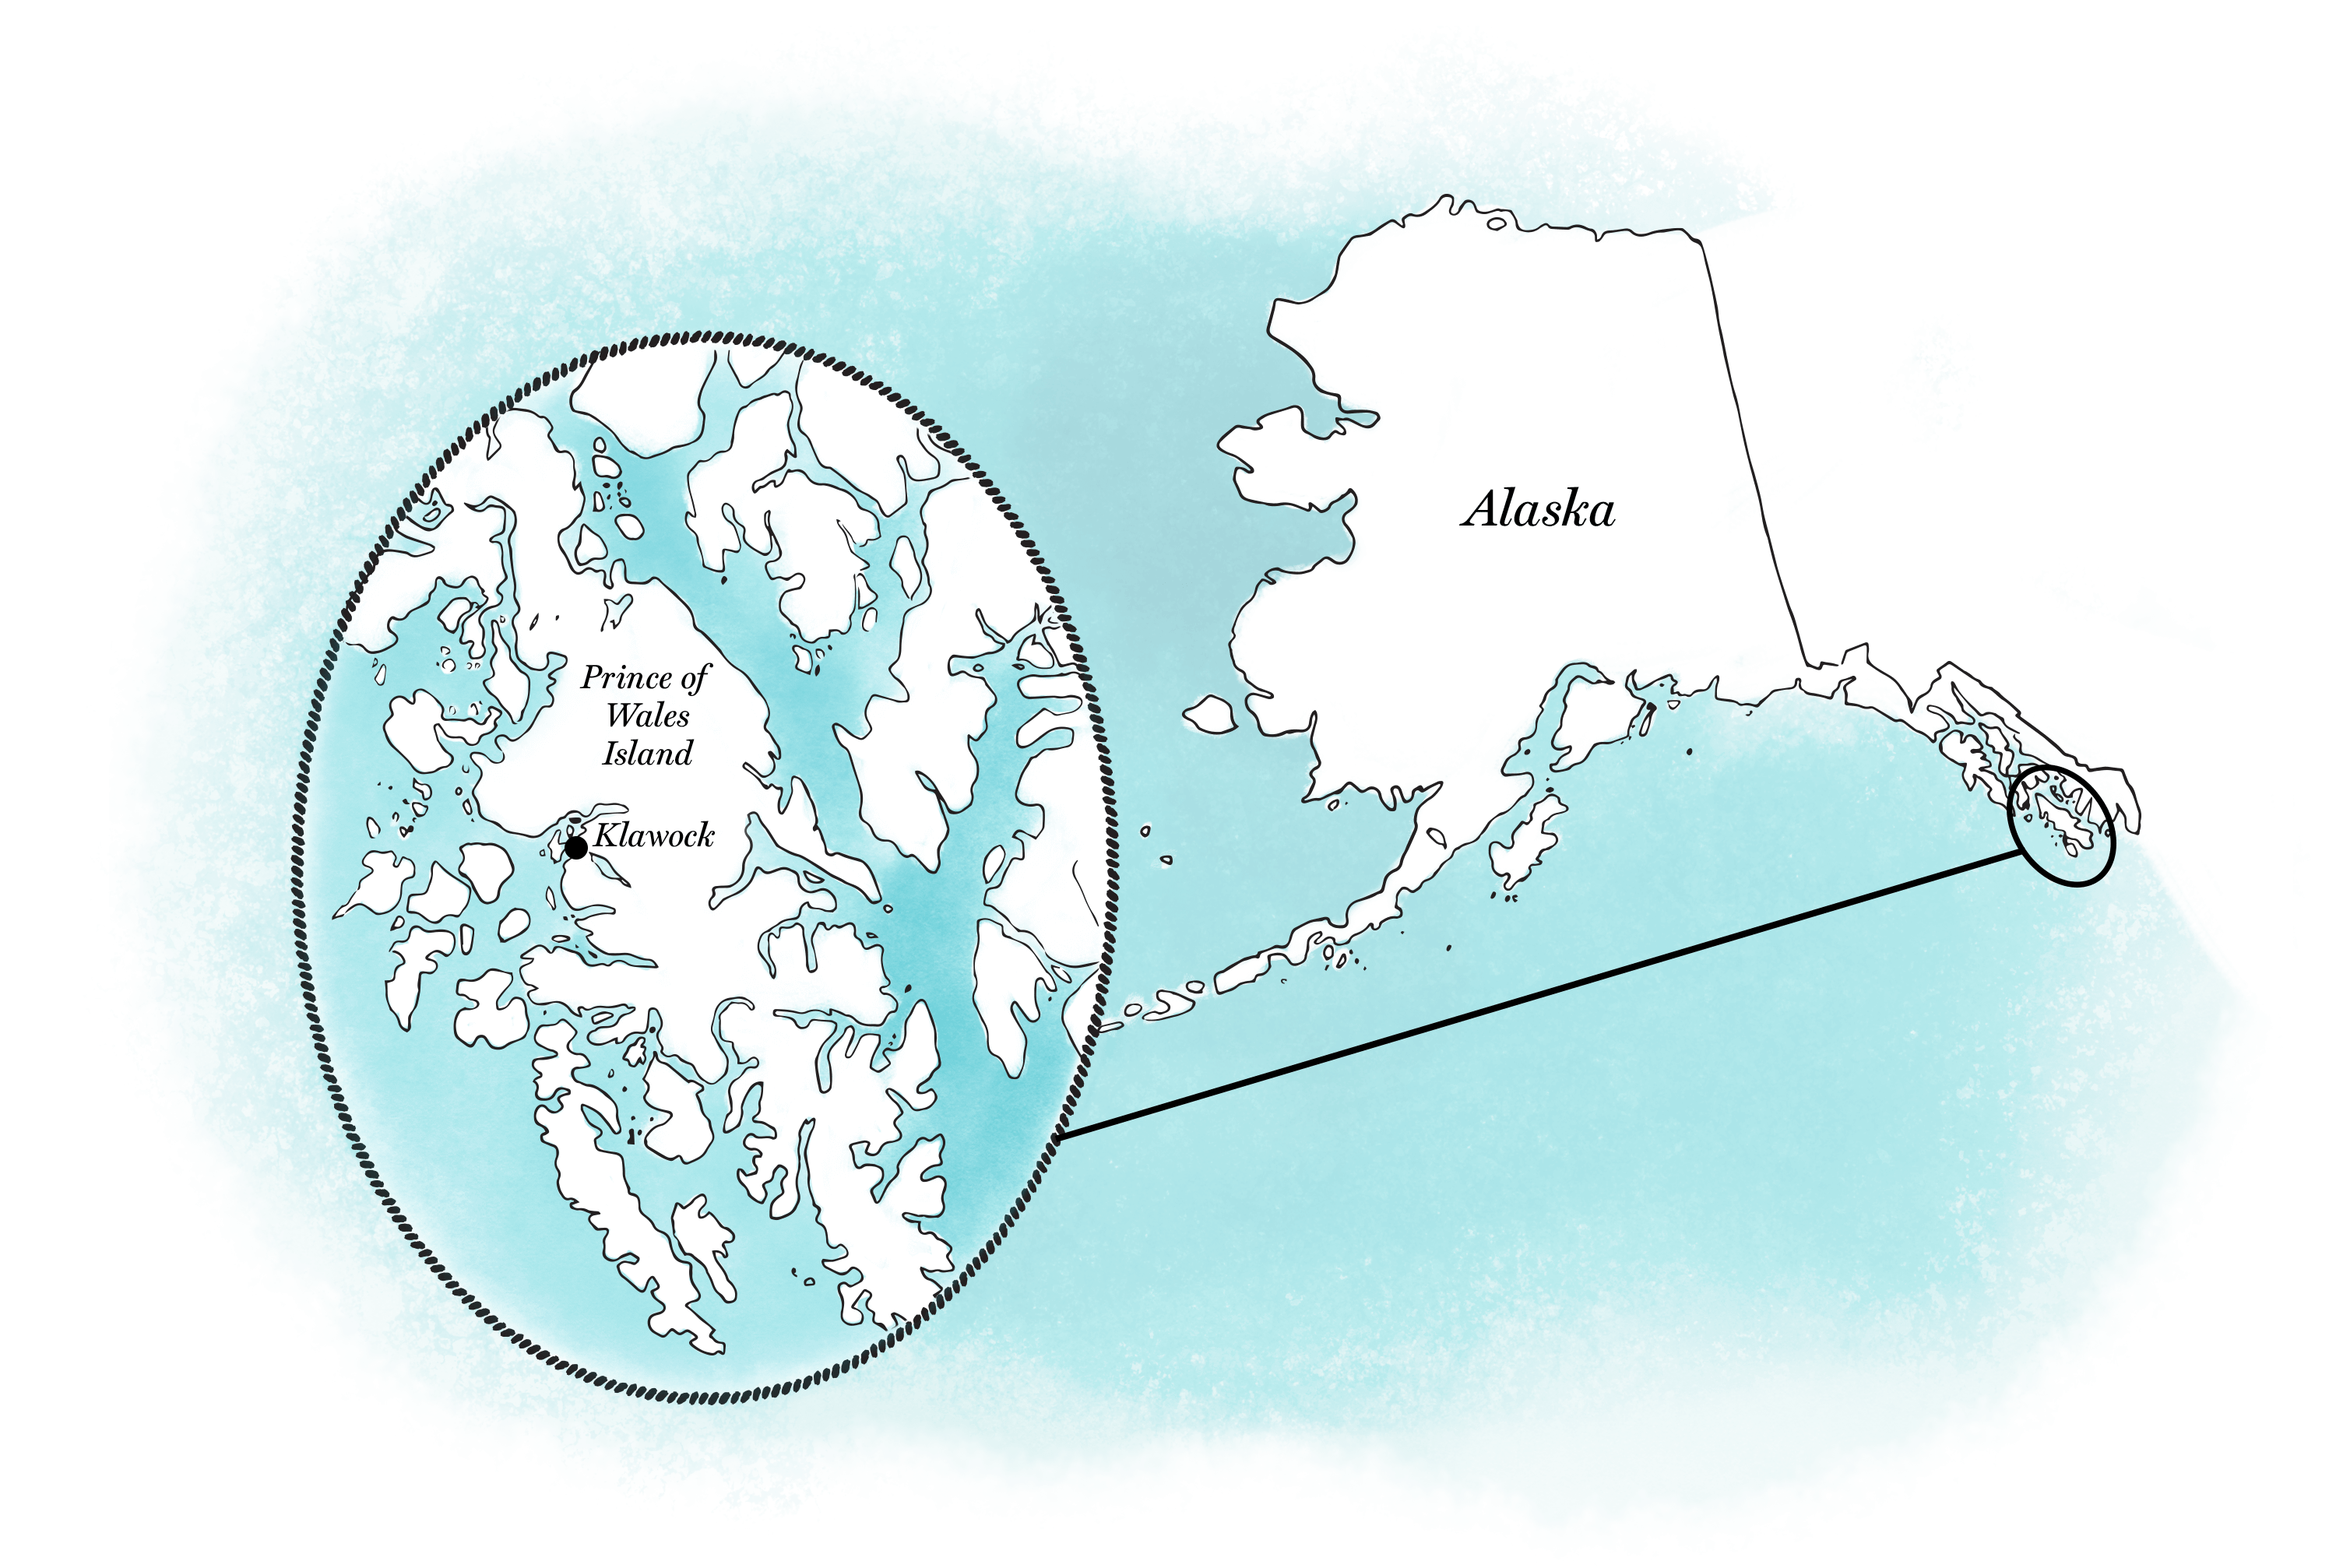 Map of Alaska with focus on Klawock on Prince of Wales Island